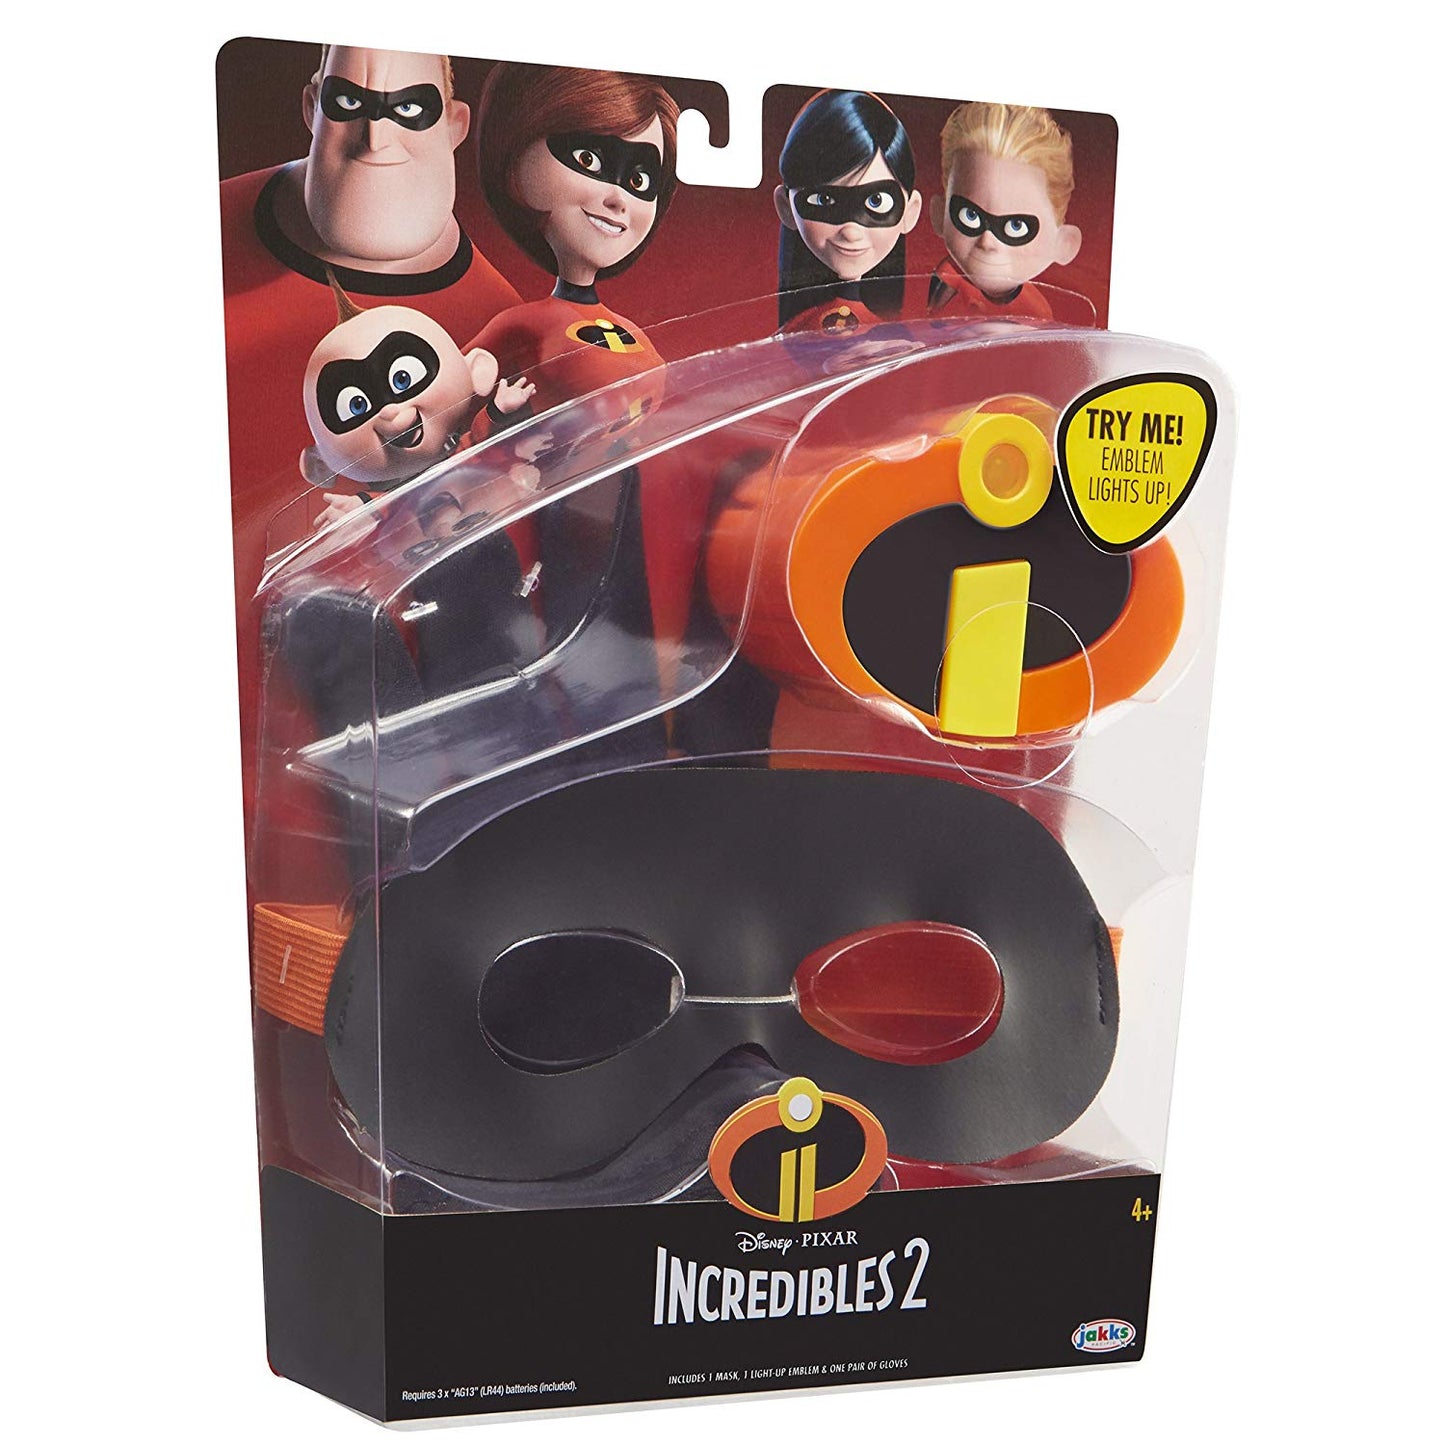 The Incredibles 2 Gear Set, 3-Piece (Mask/Gloves/Emblem)